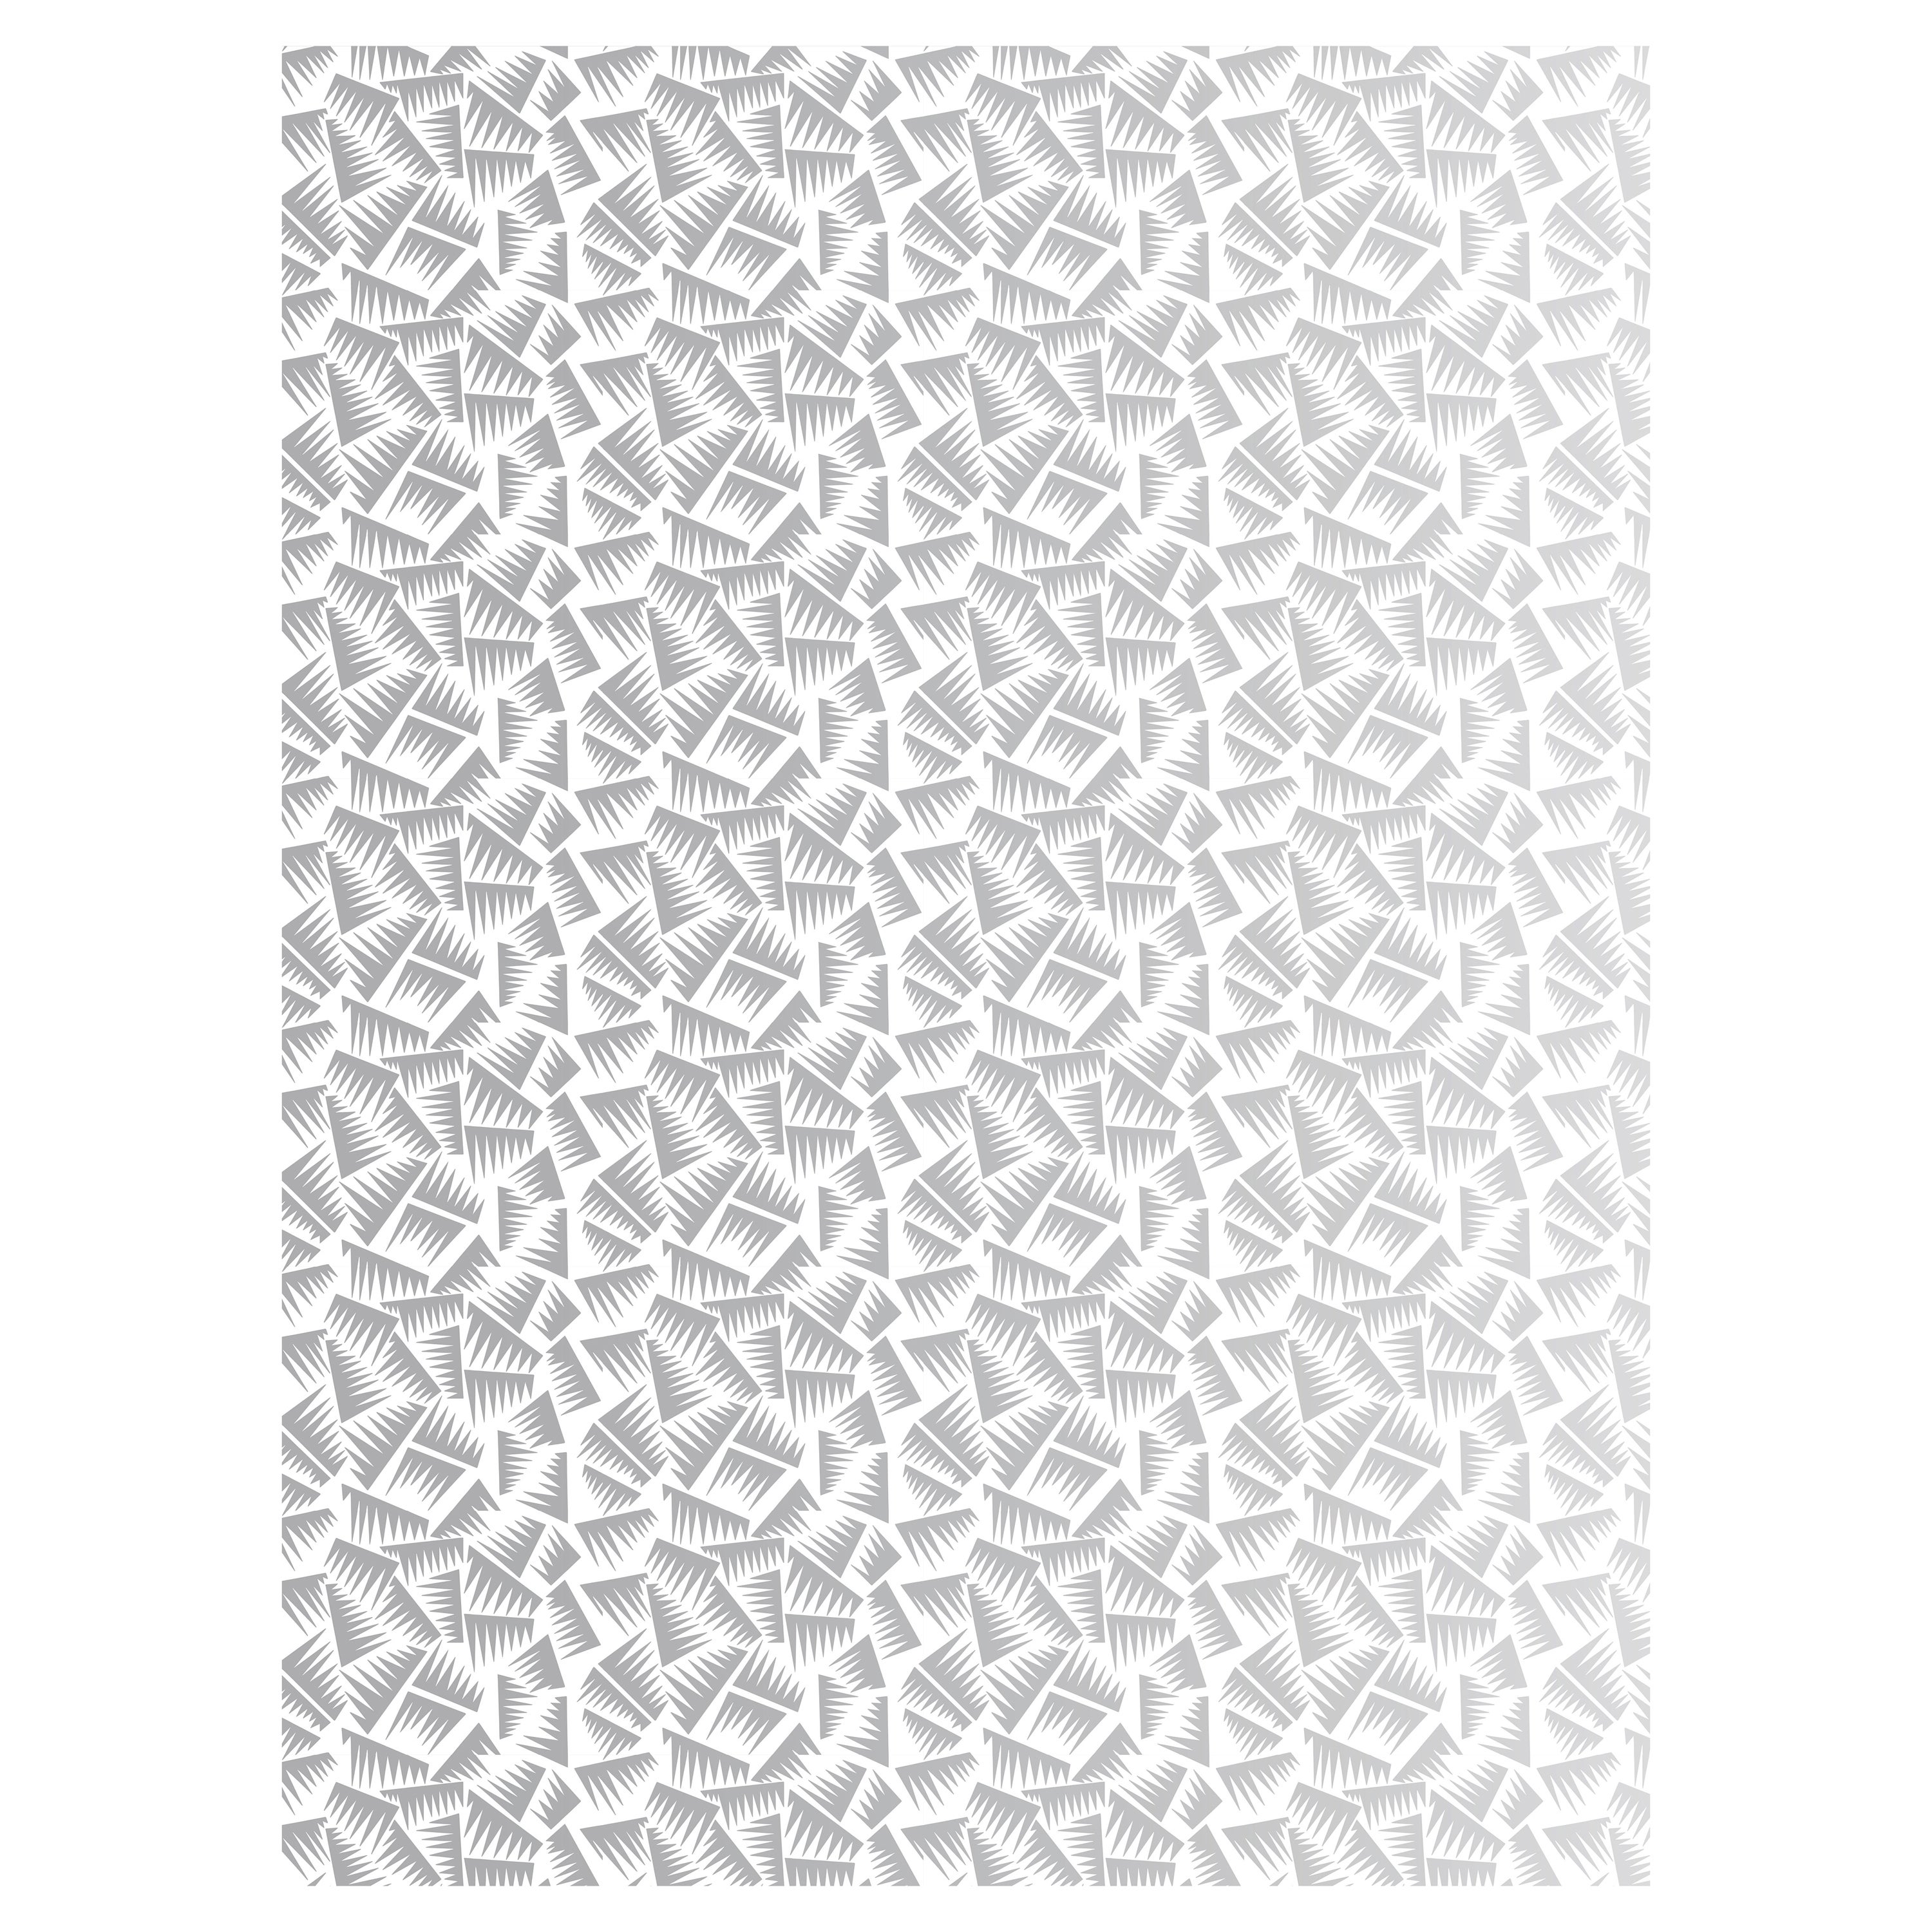 JER Wallpaper, Grey & White by Jacques-Emile Ruhlmann for La Chance